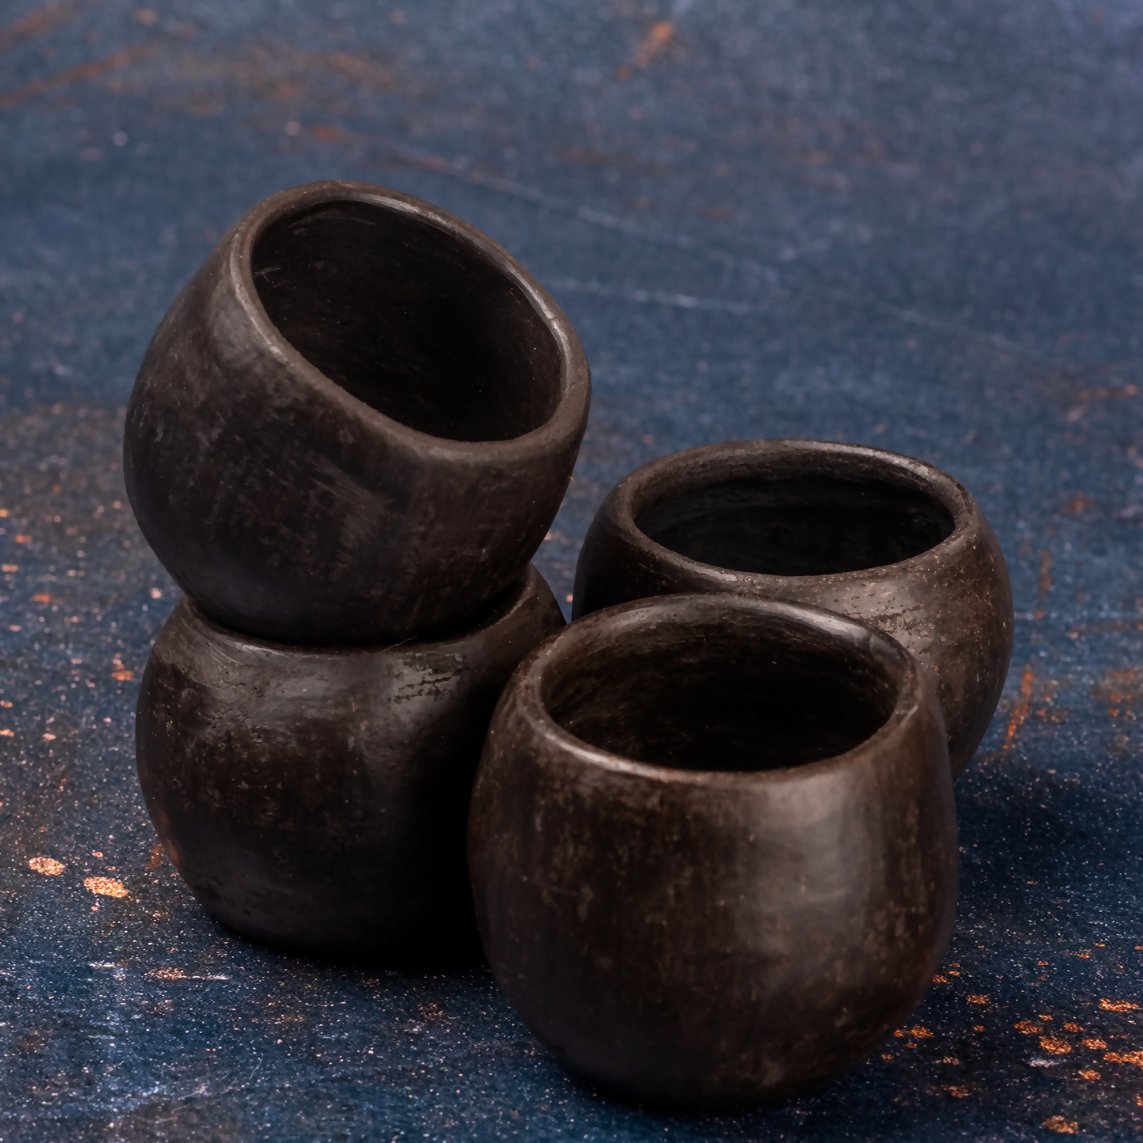 Clay Pottery “Smoky” Shot Glass